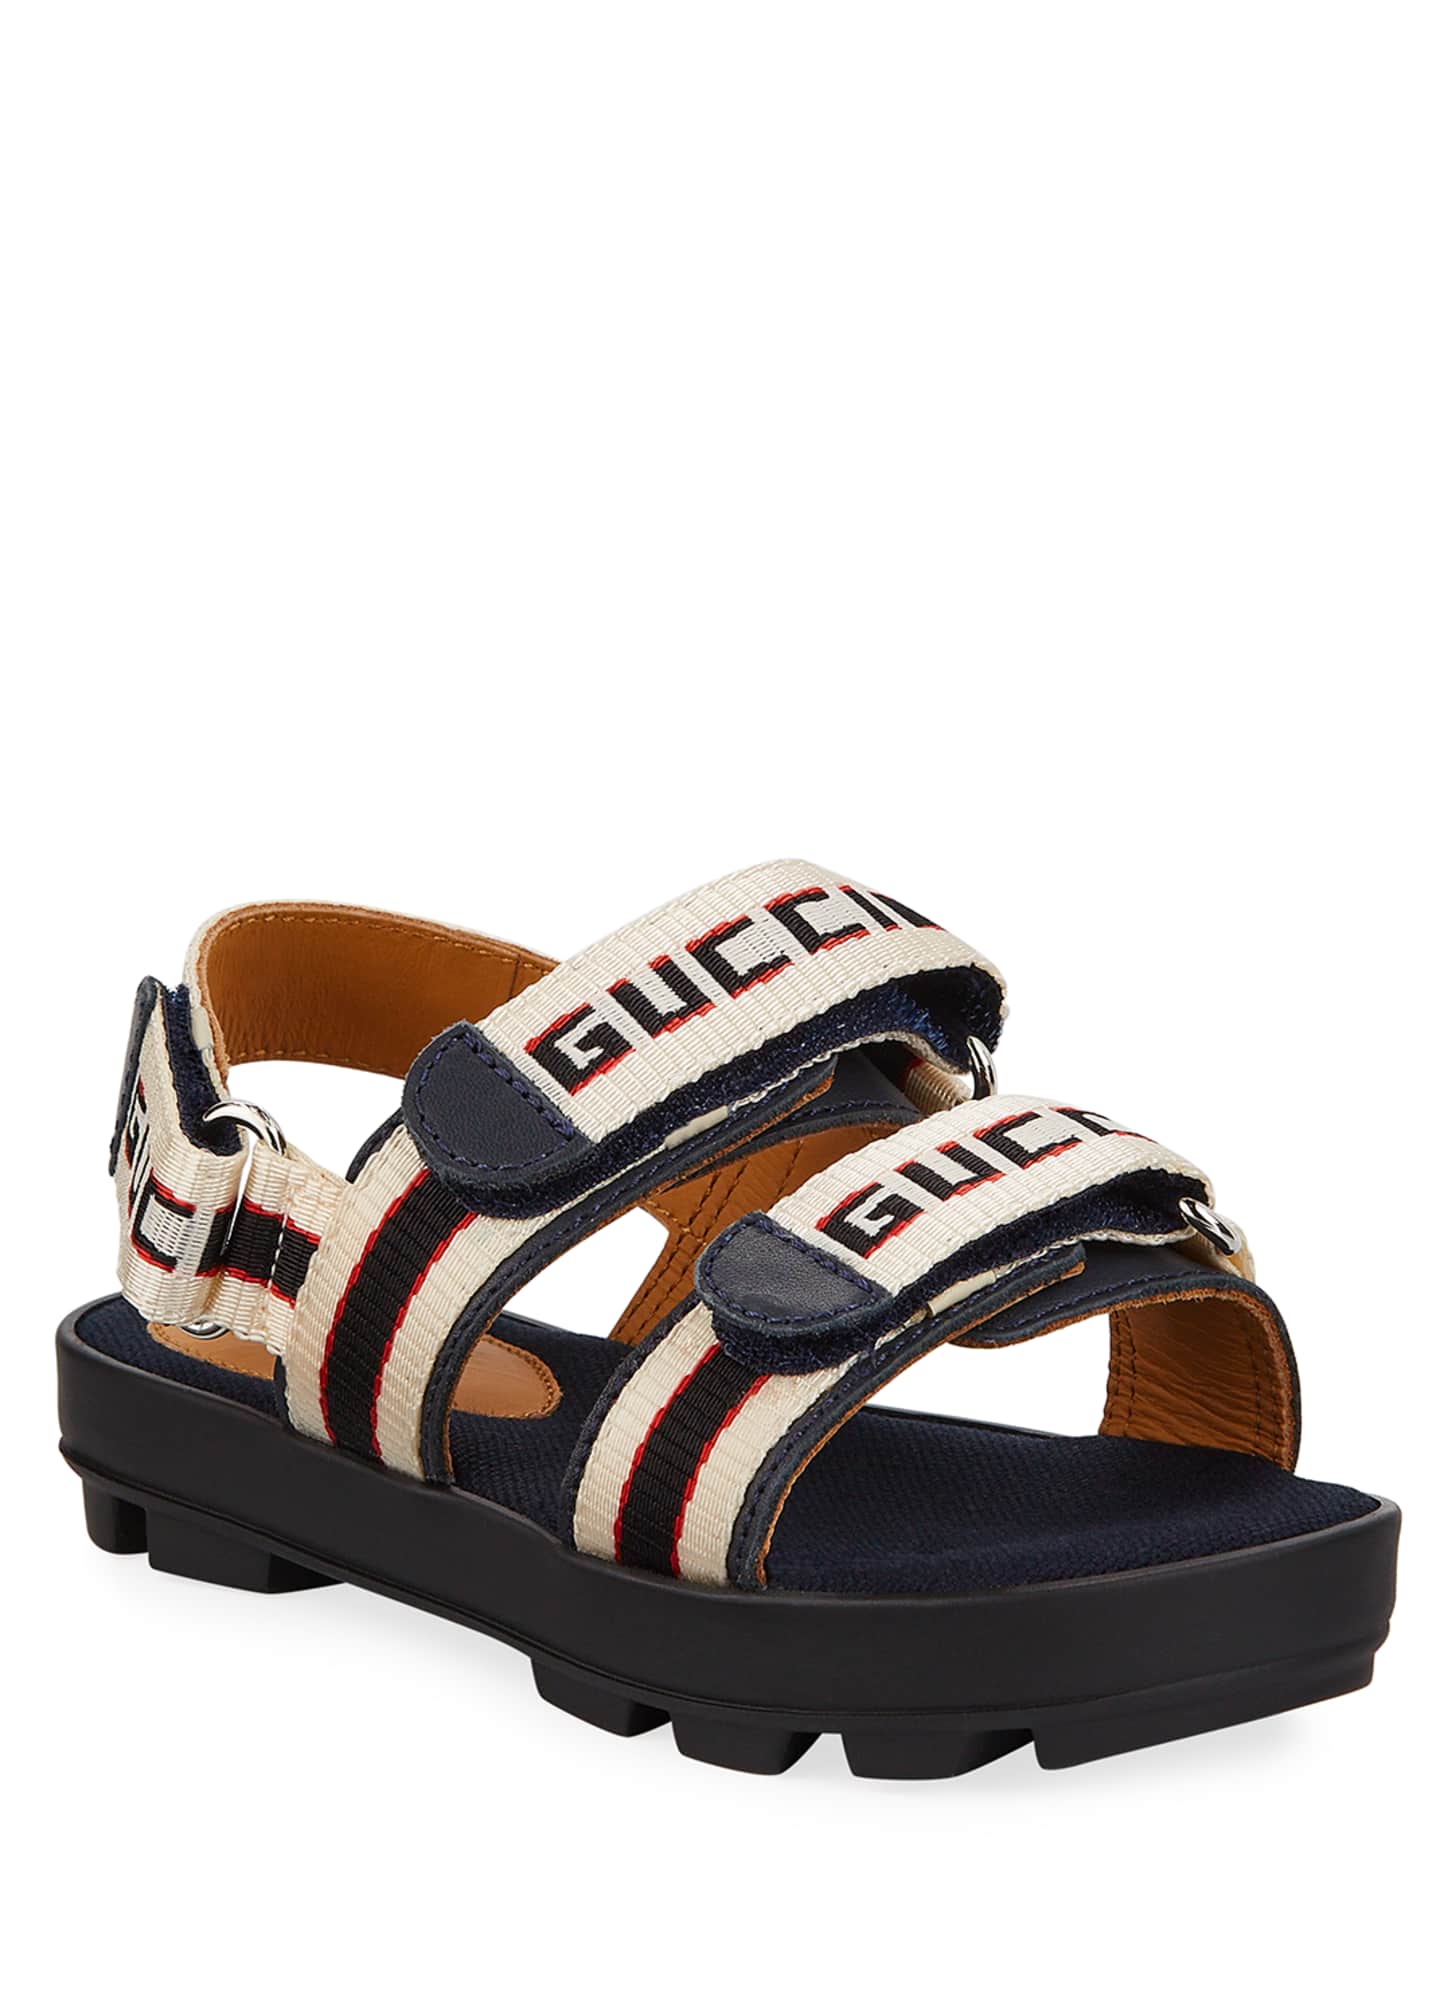 gucci sandals kids